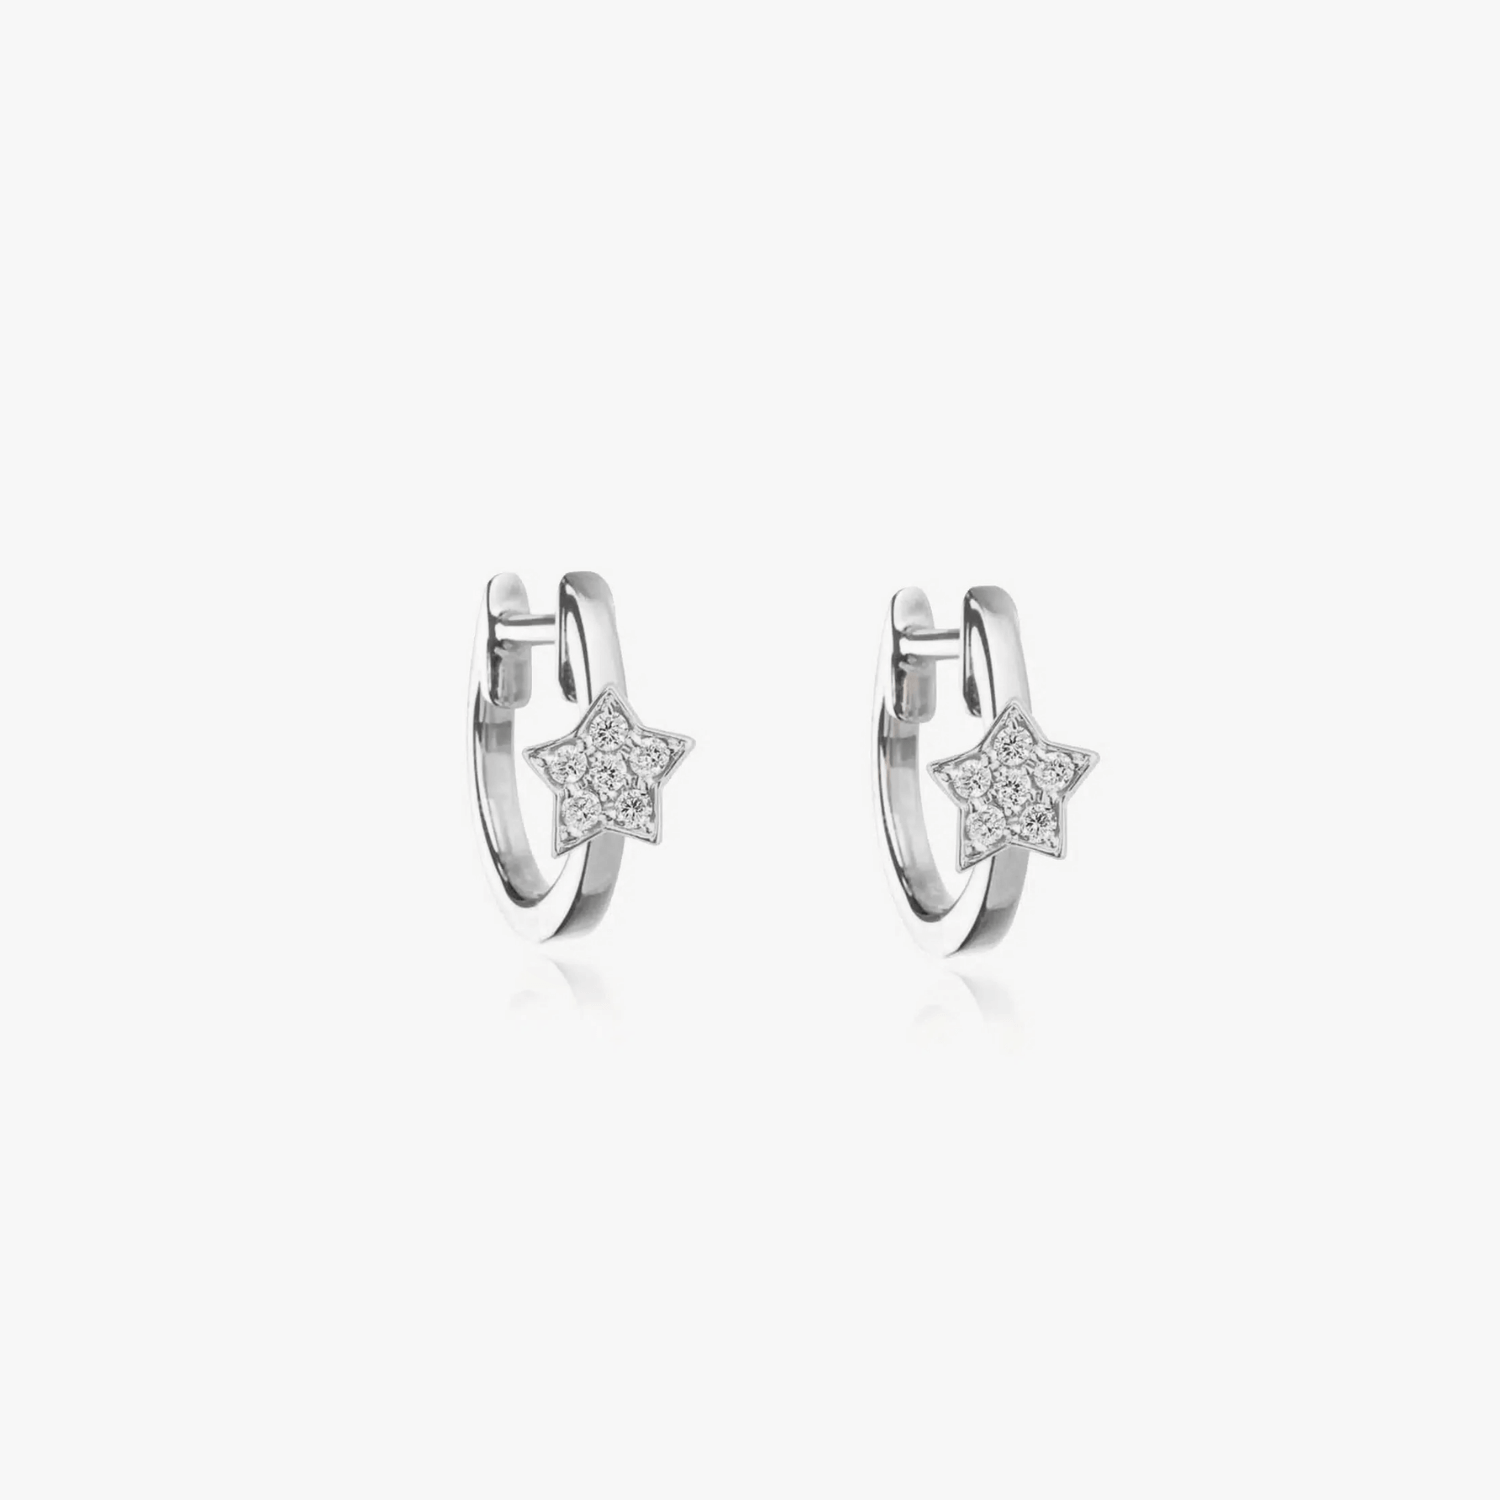 Estella silver earrings - Zirconium